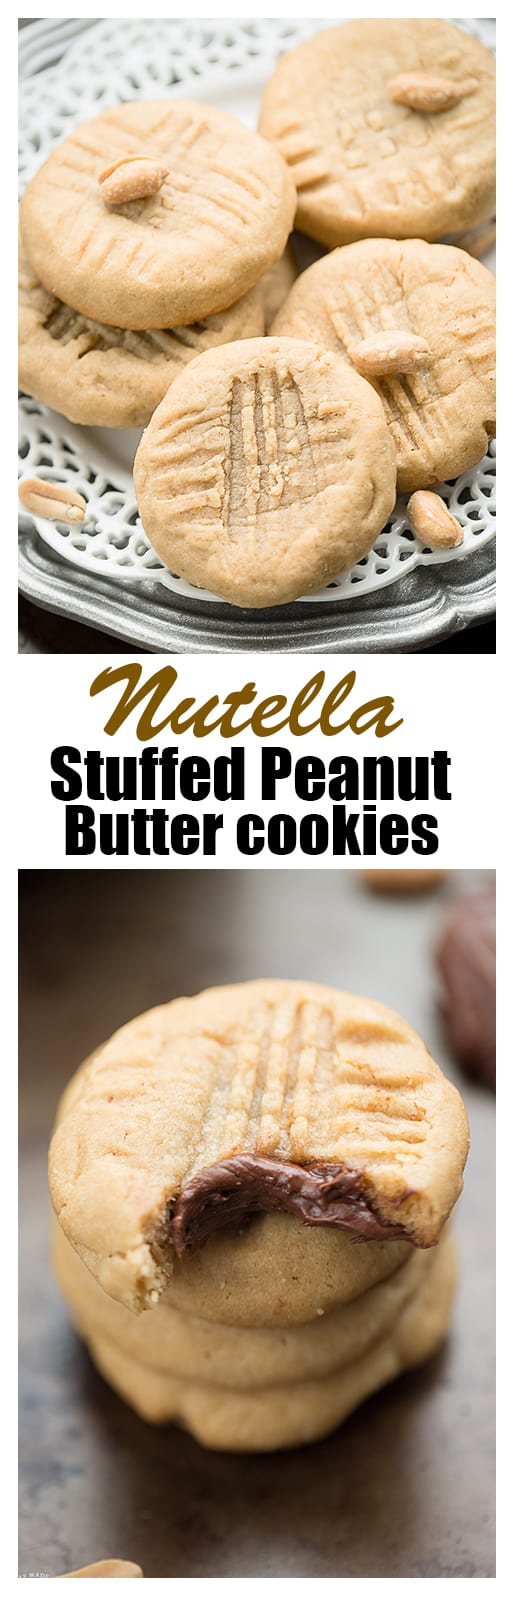 Nutella Stuffed Peanut Butter Cookies Make The Perfect Treat